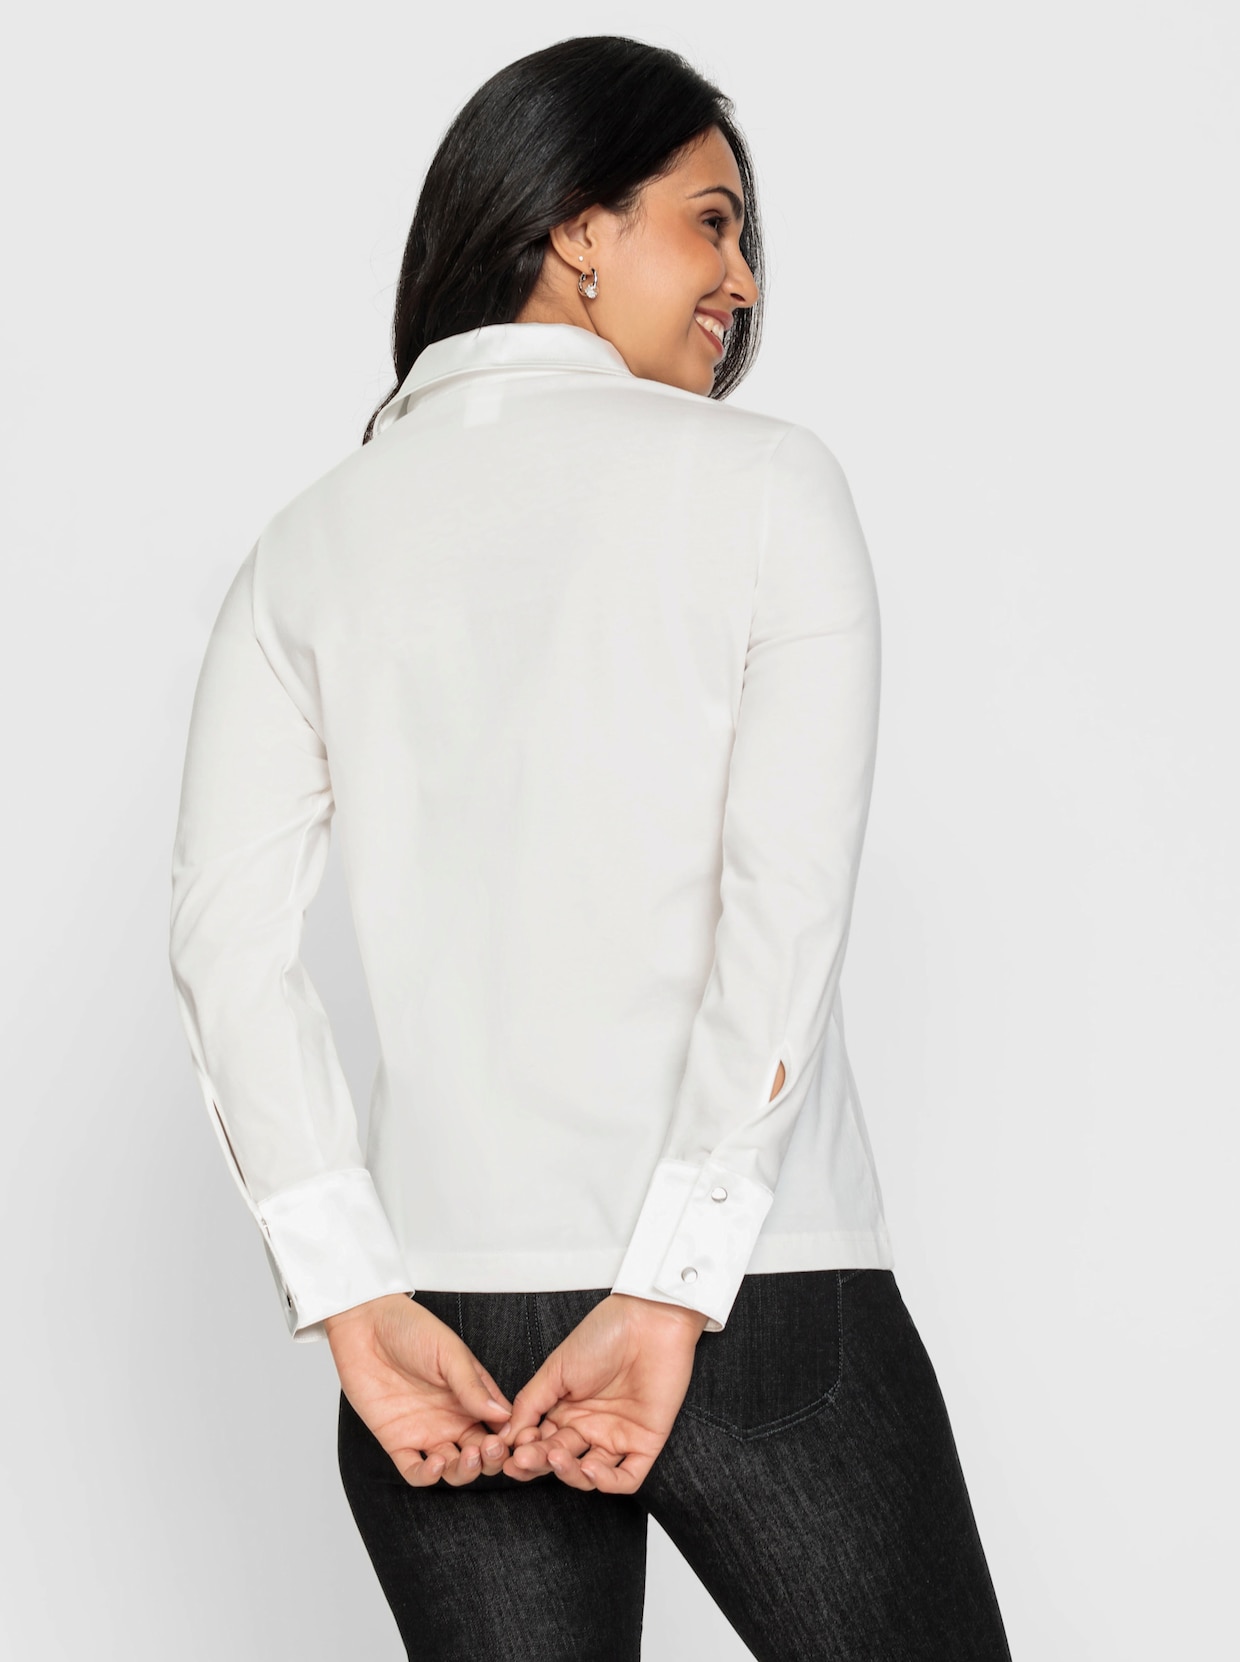 Langarm-Poloshirt - weiß